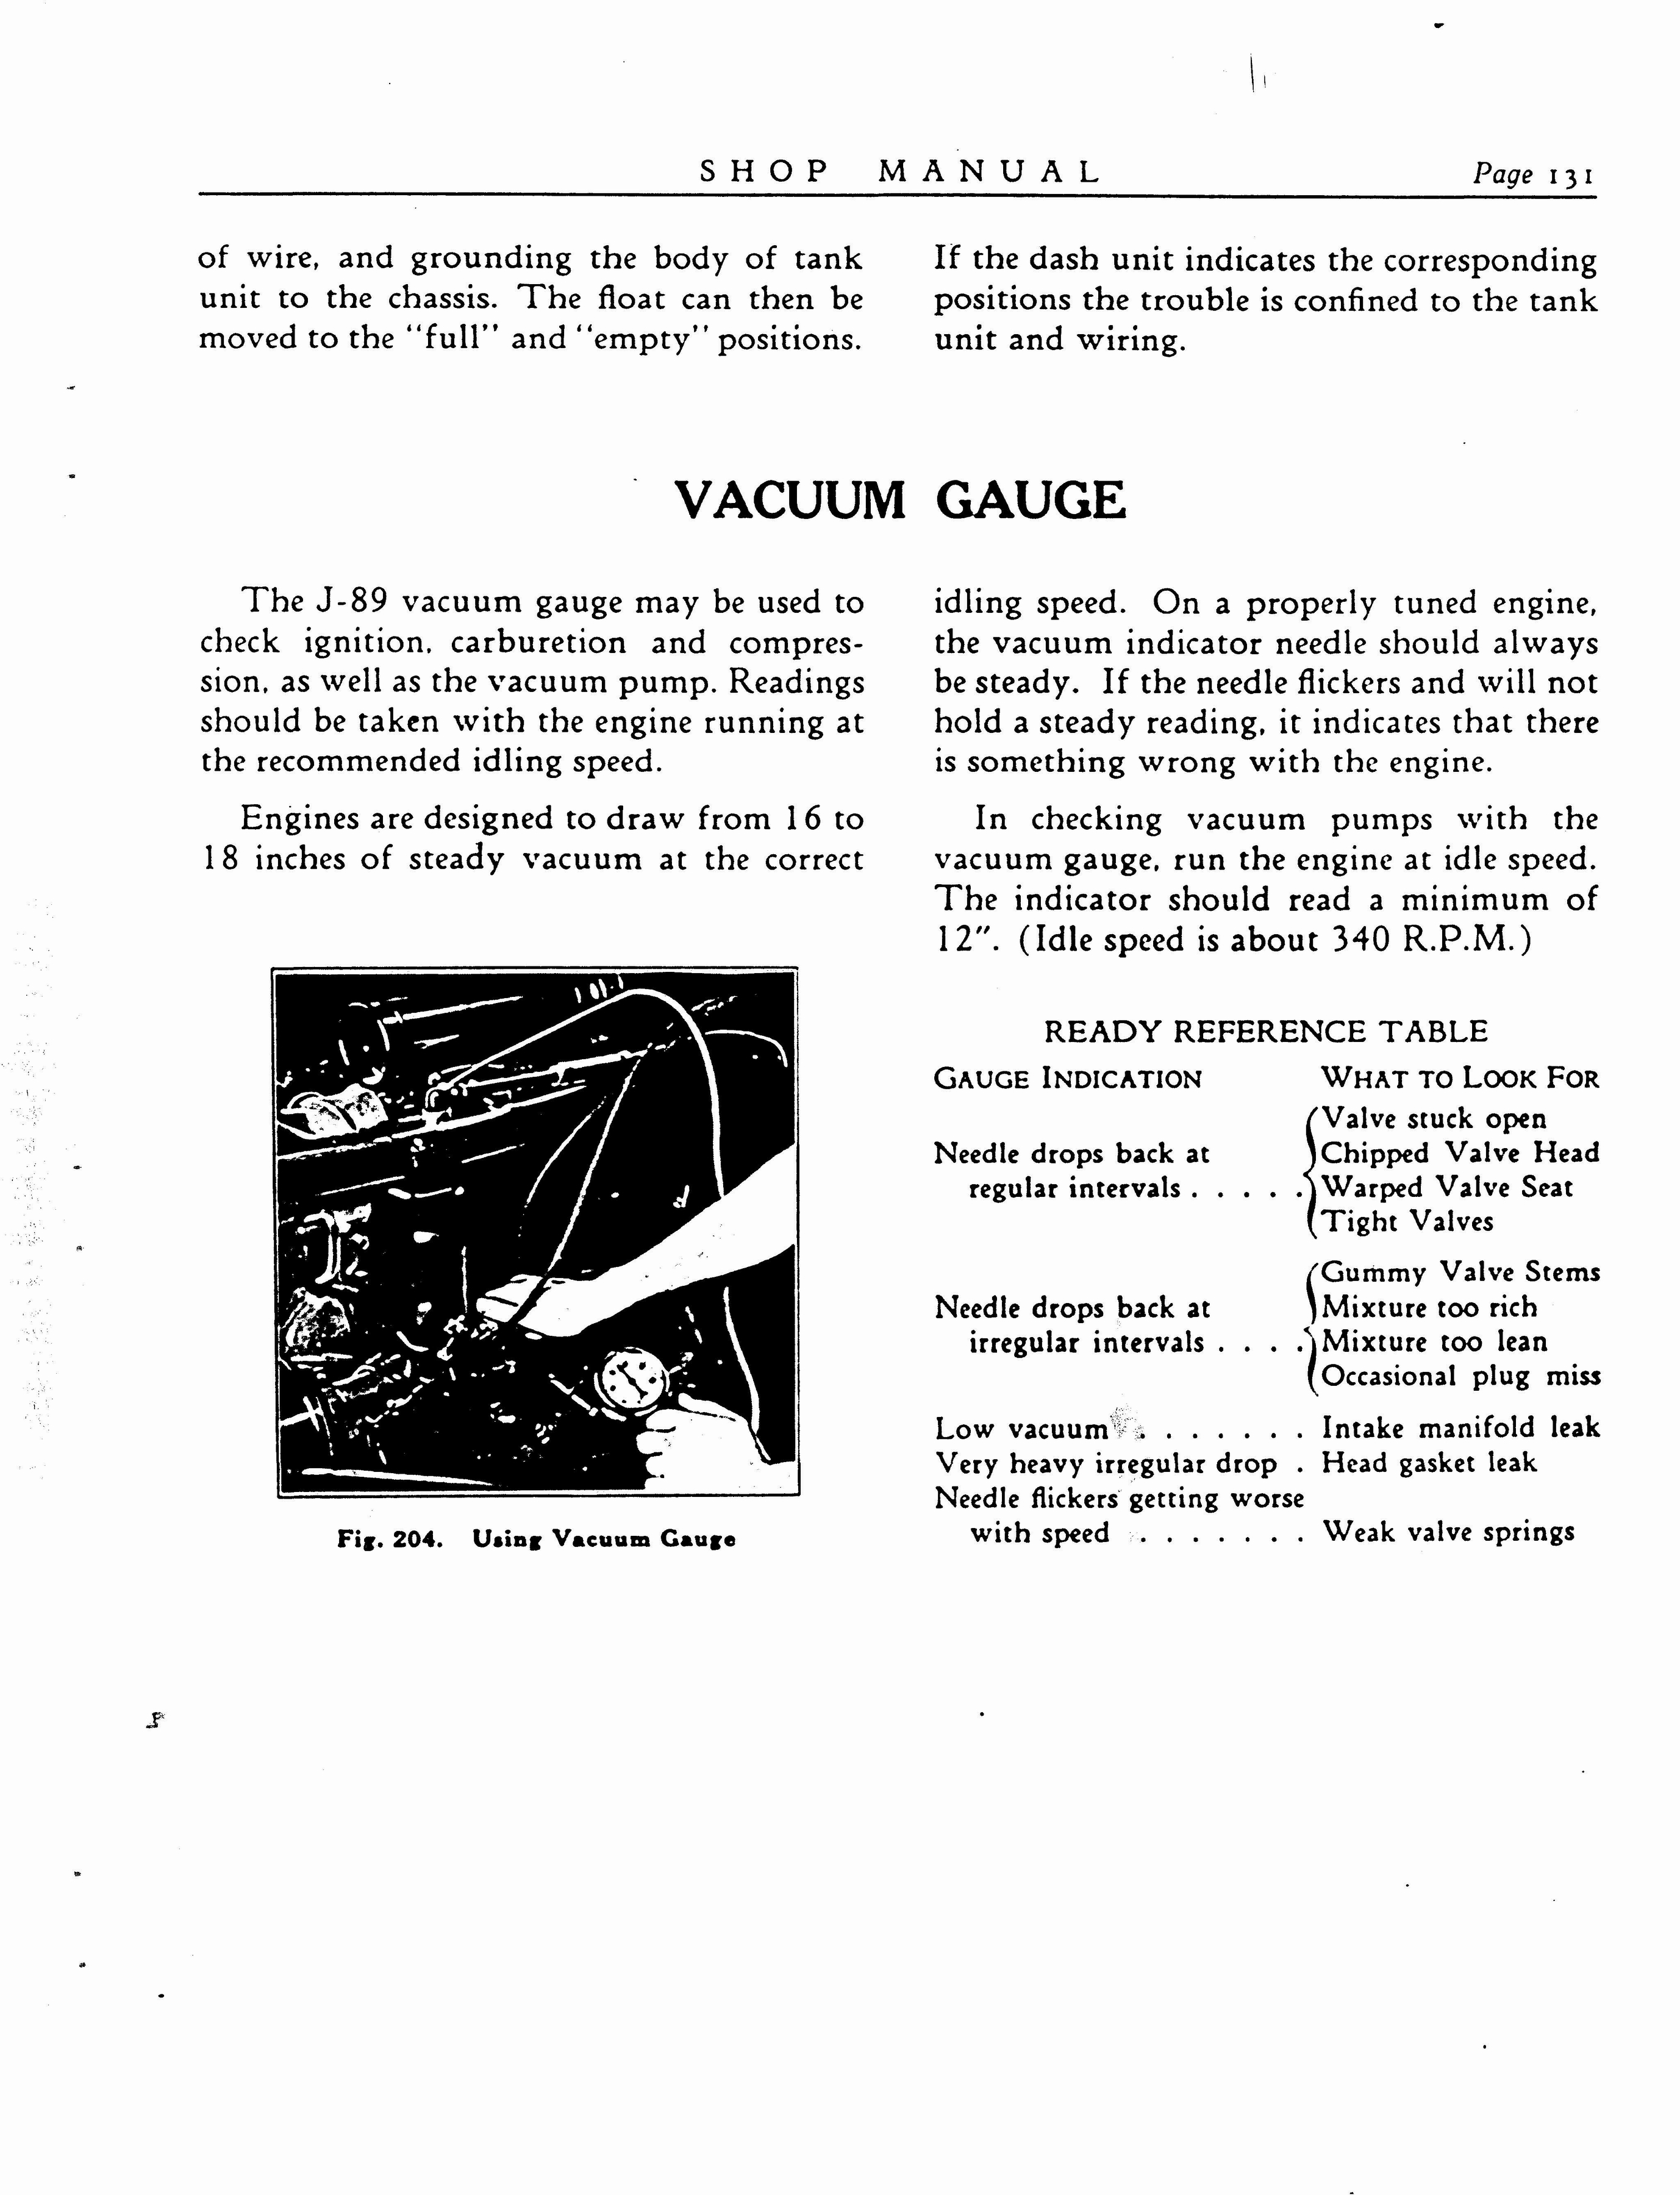 n_1933 Buick Shop Manual_Page_132.jpg